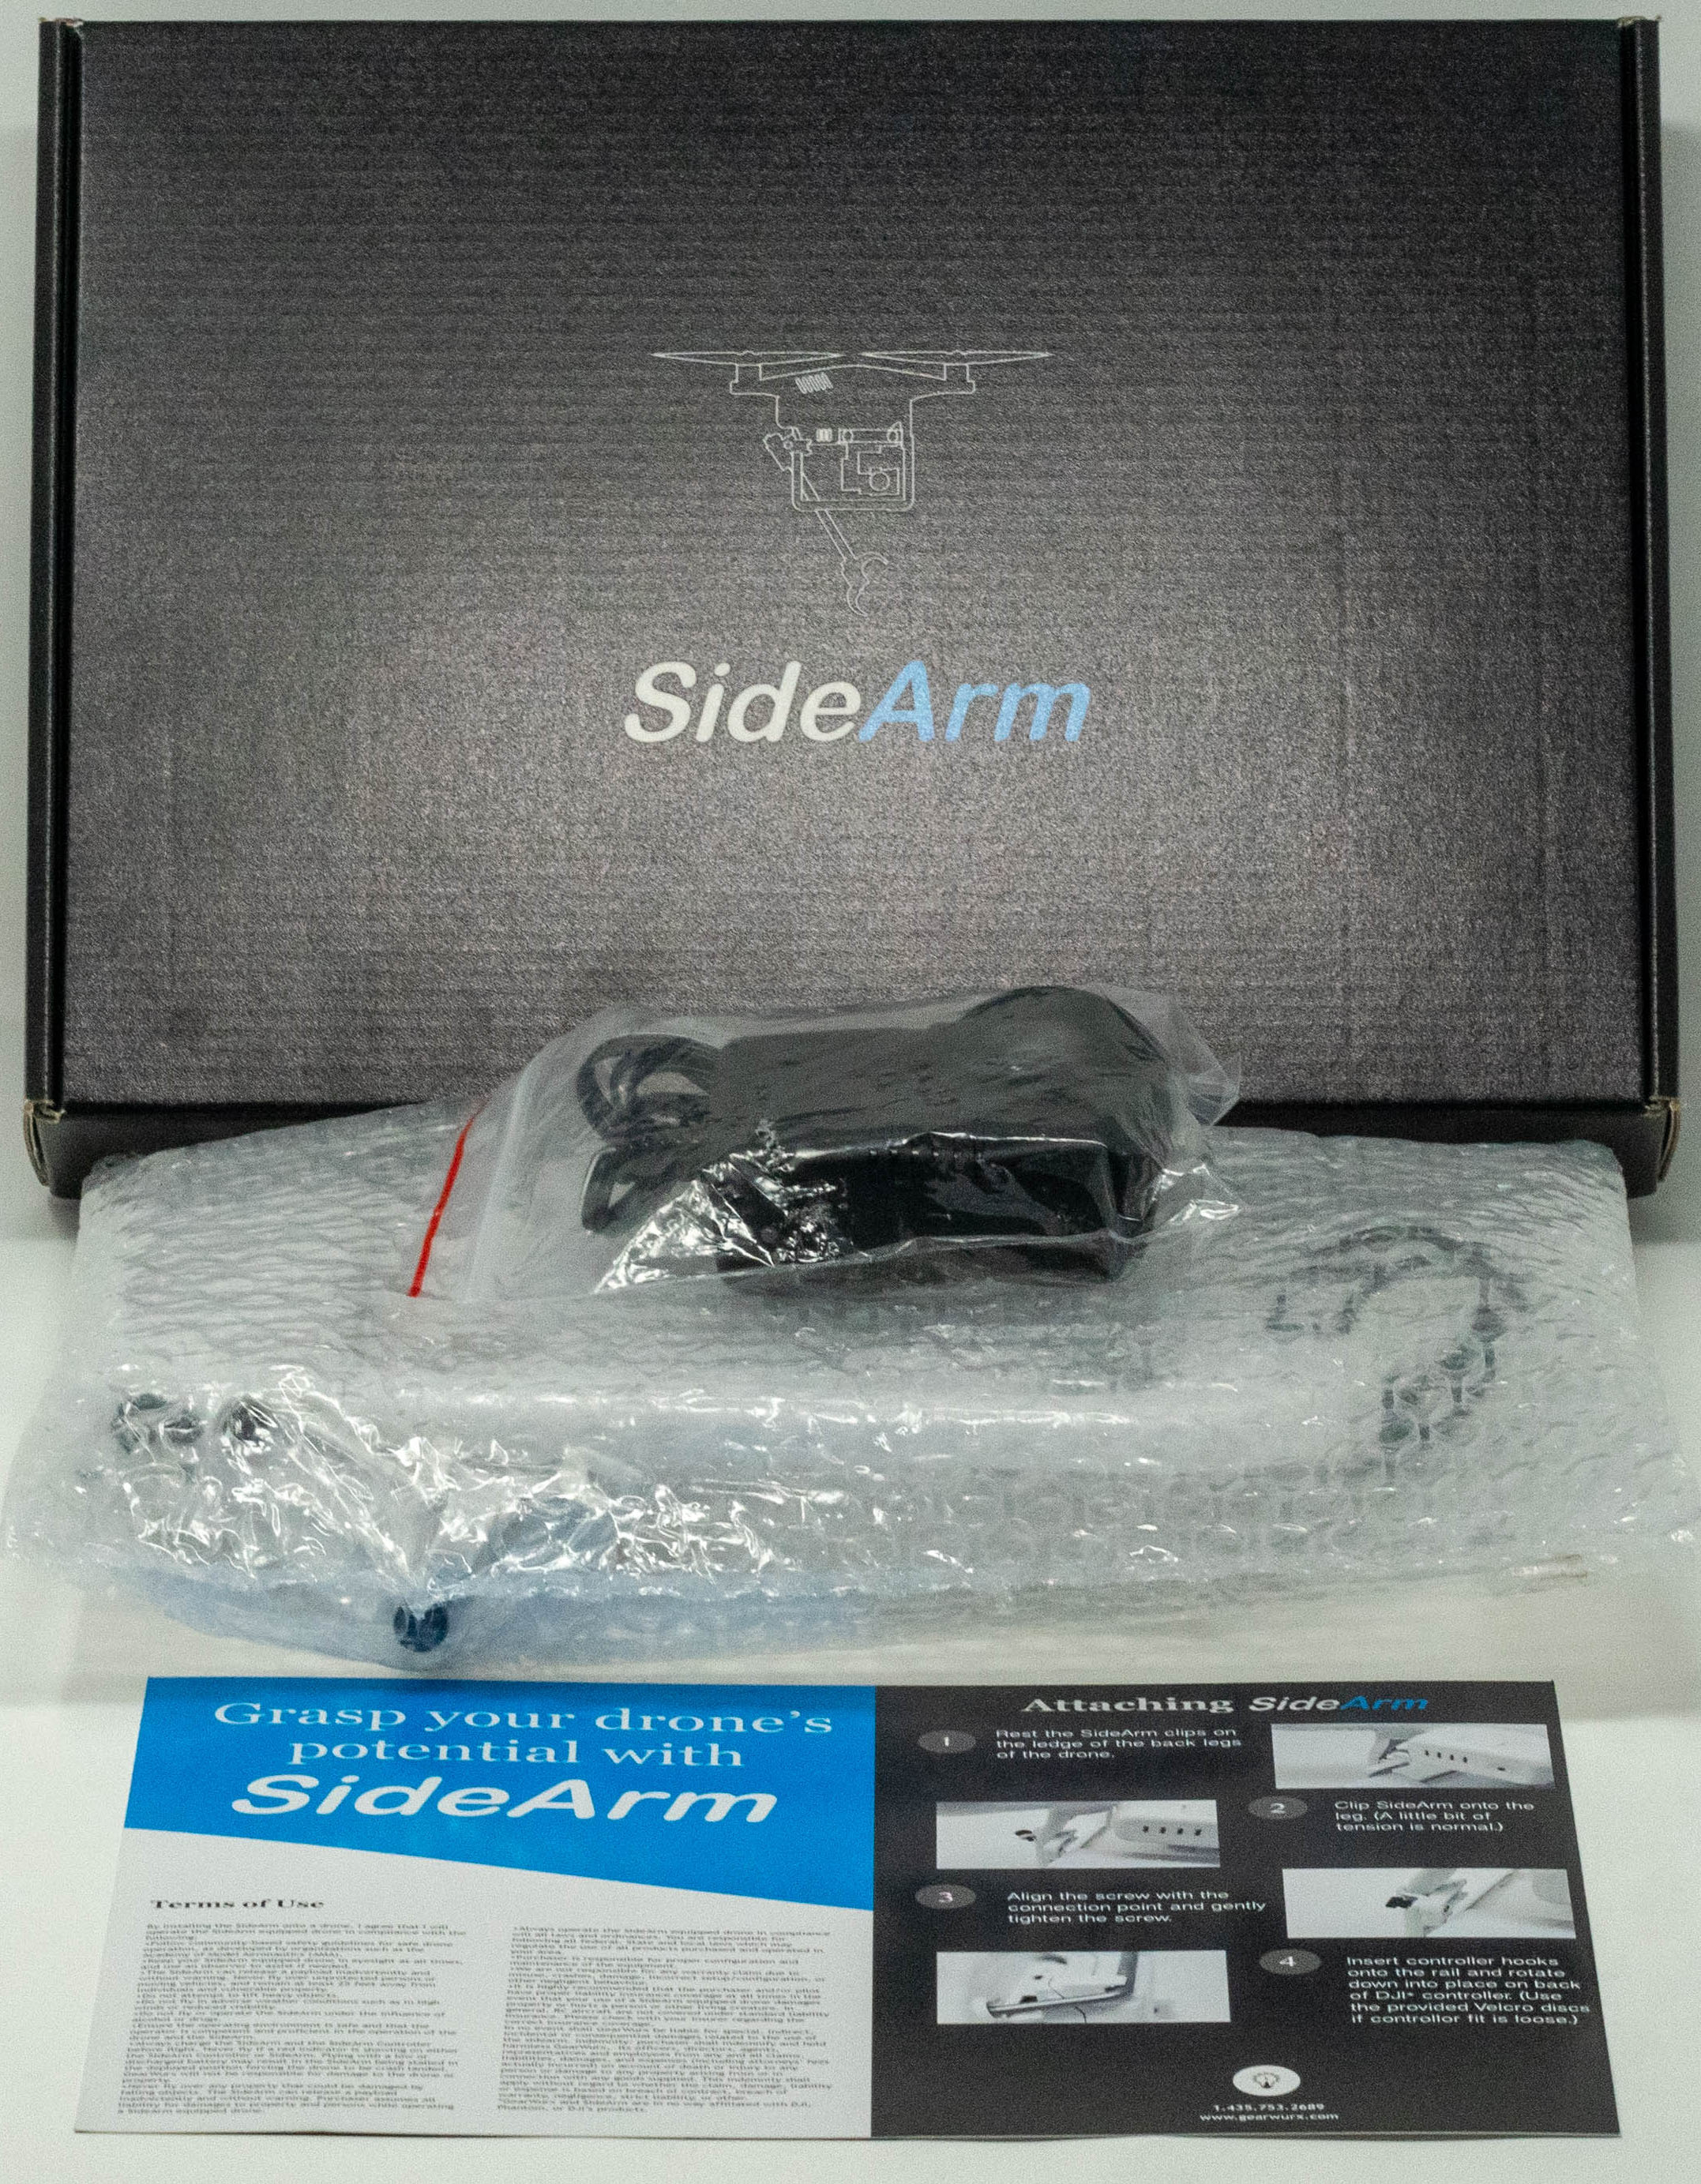 SideArm Robotic Arm Kit for DJI Phantom 4 V1- Click to Enlarge